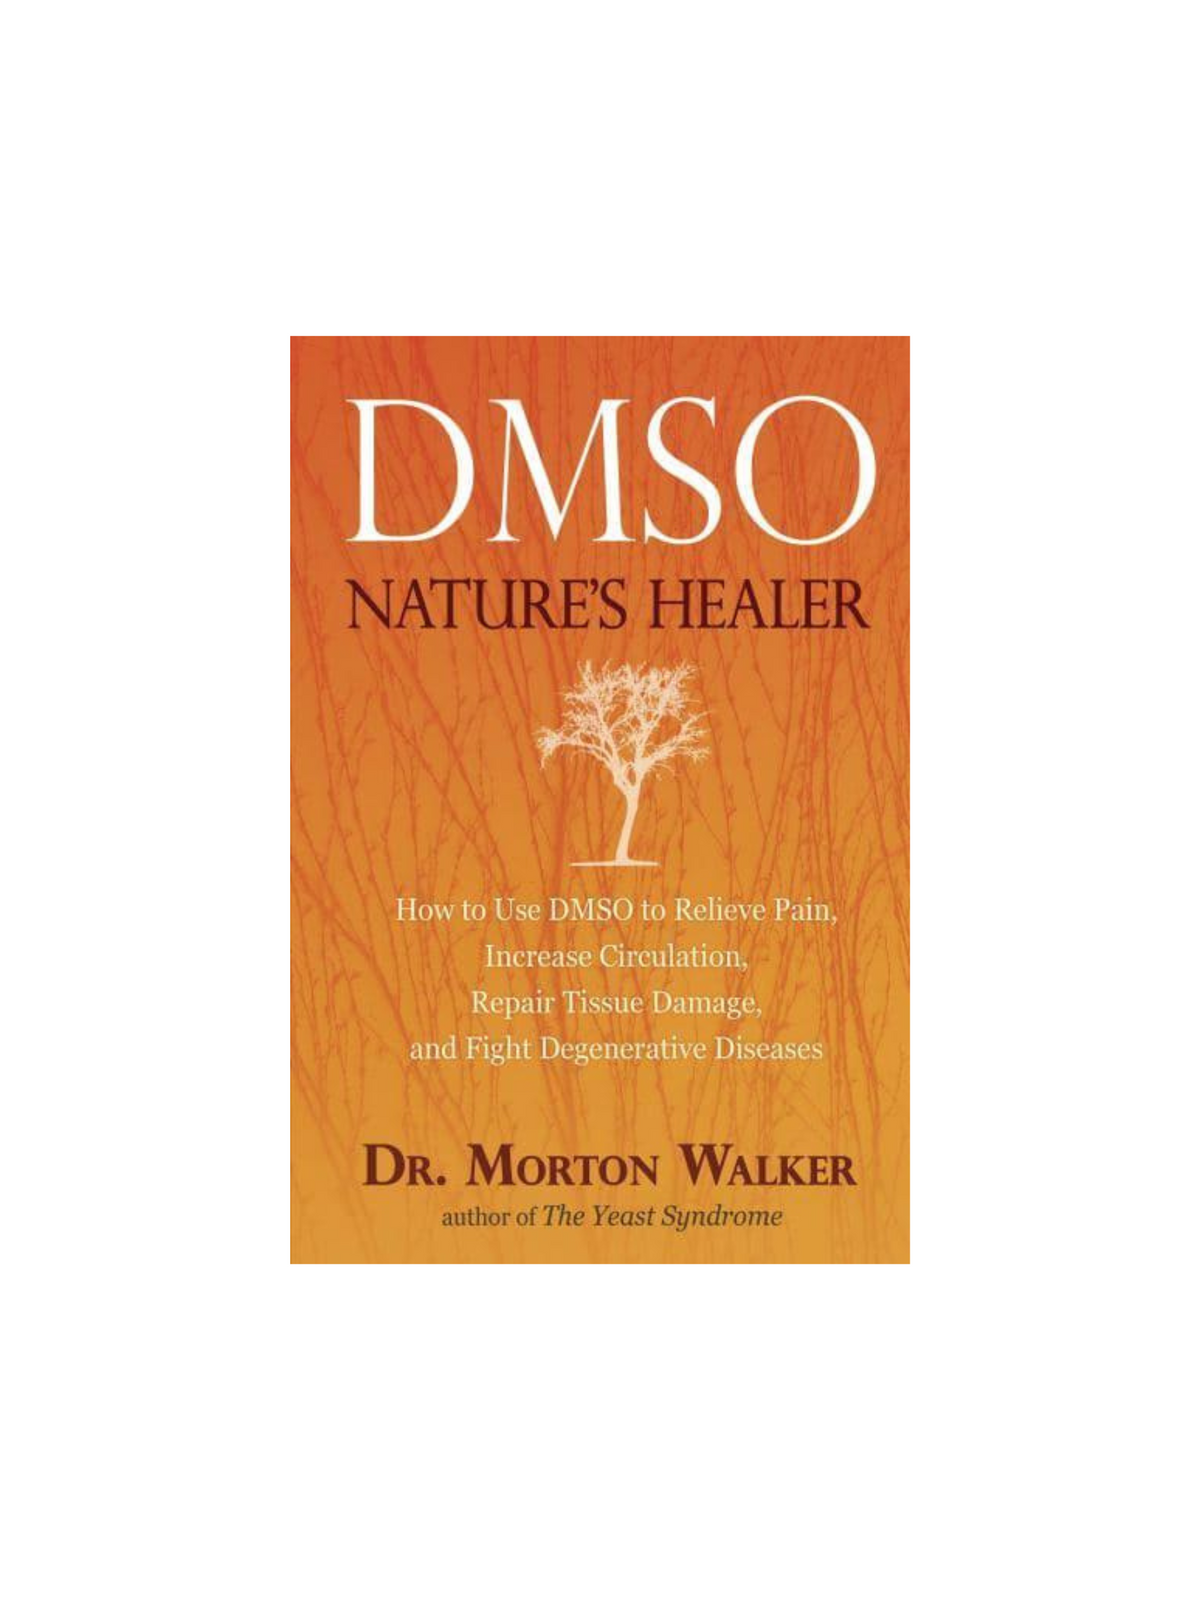 DMSO Nature's Healer Book